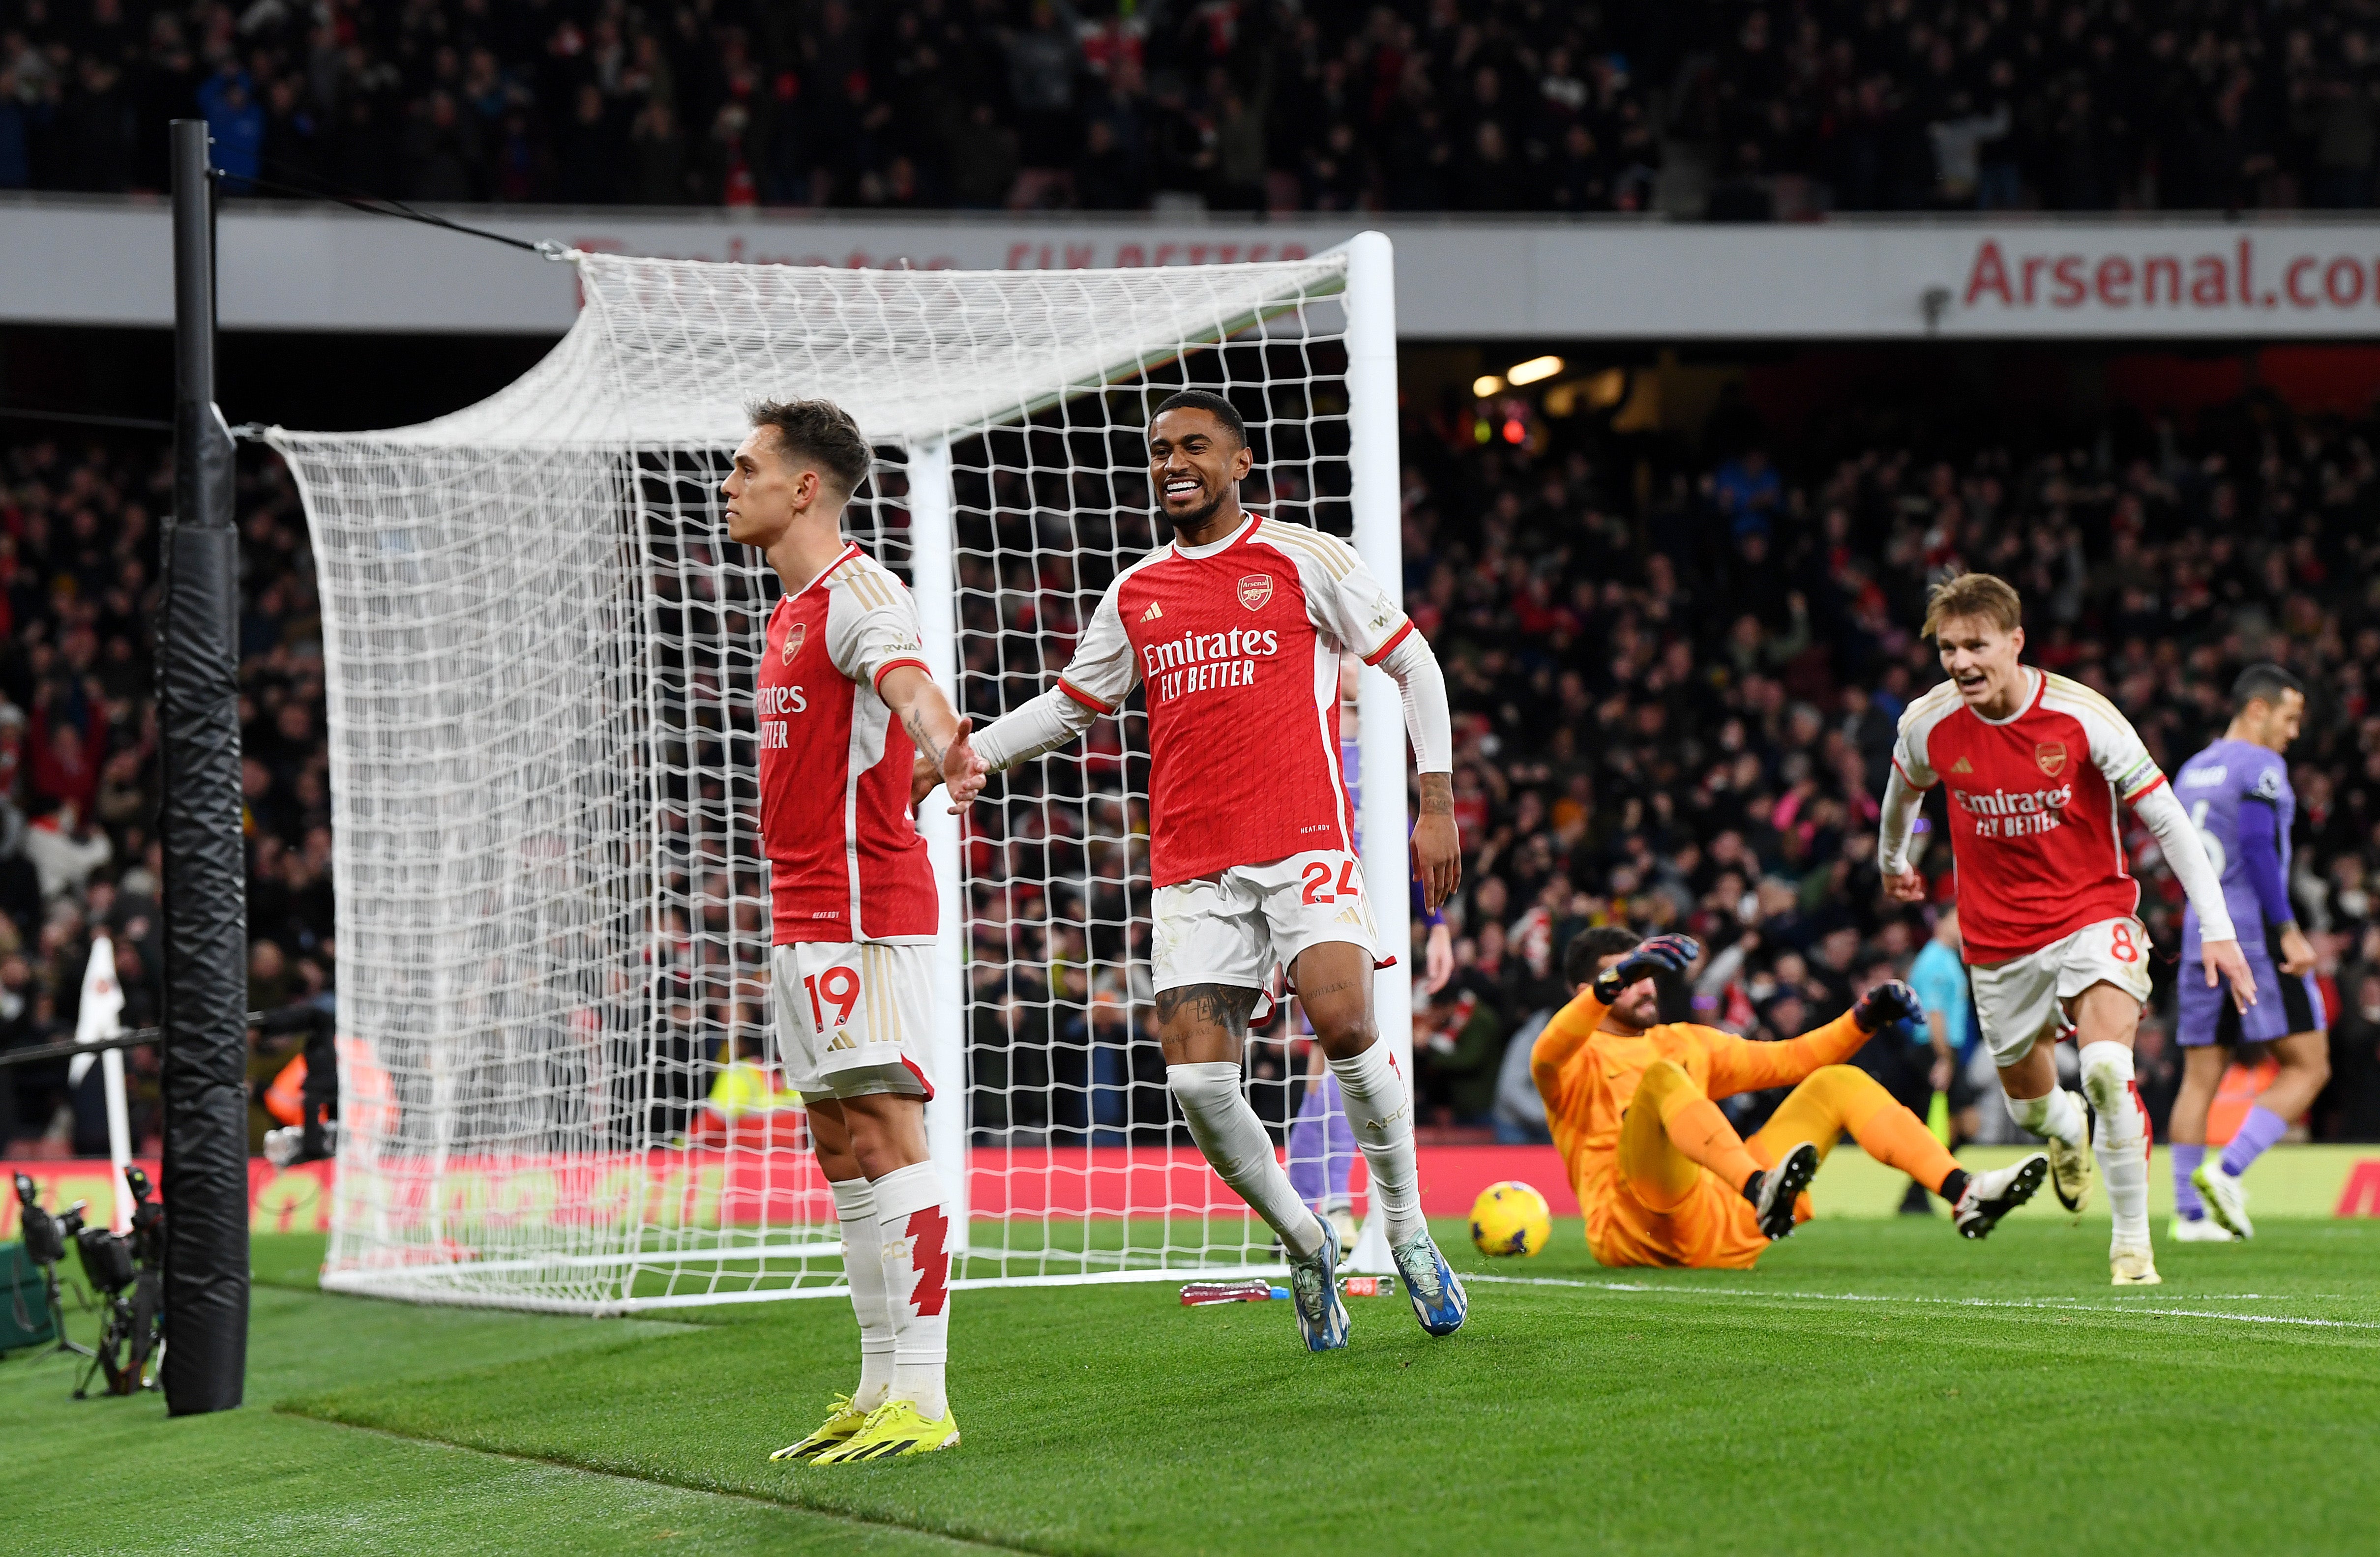 Leandro Trossard celebrates after scoring Arsenal’s third goal